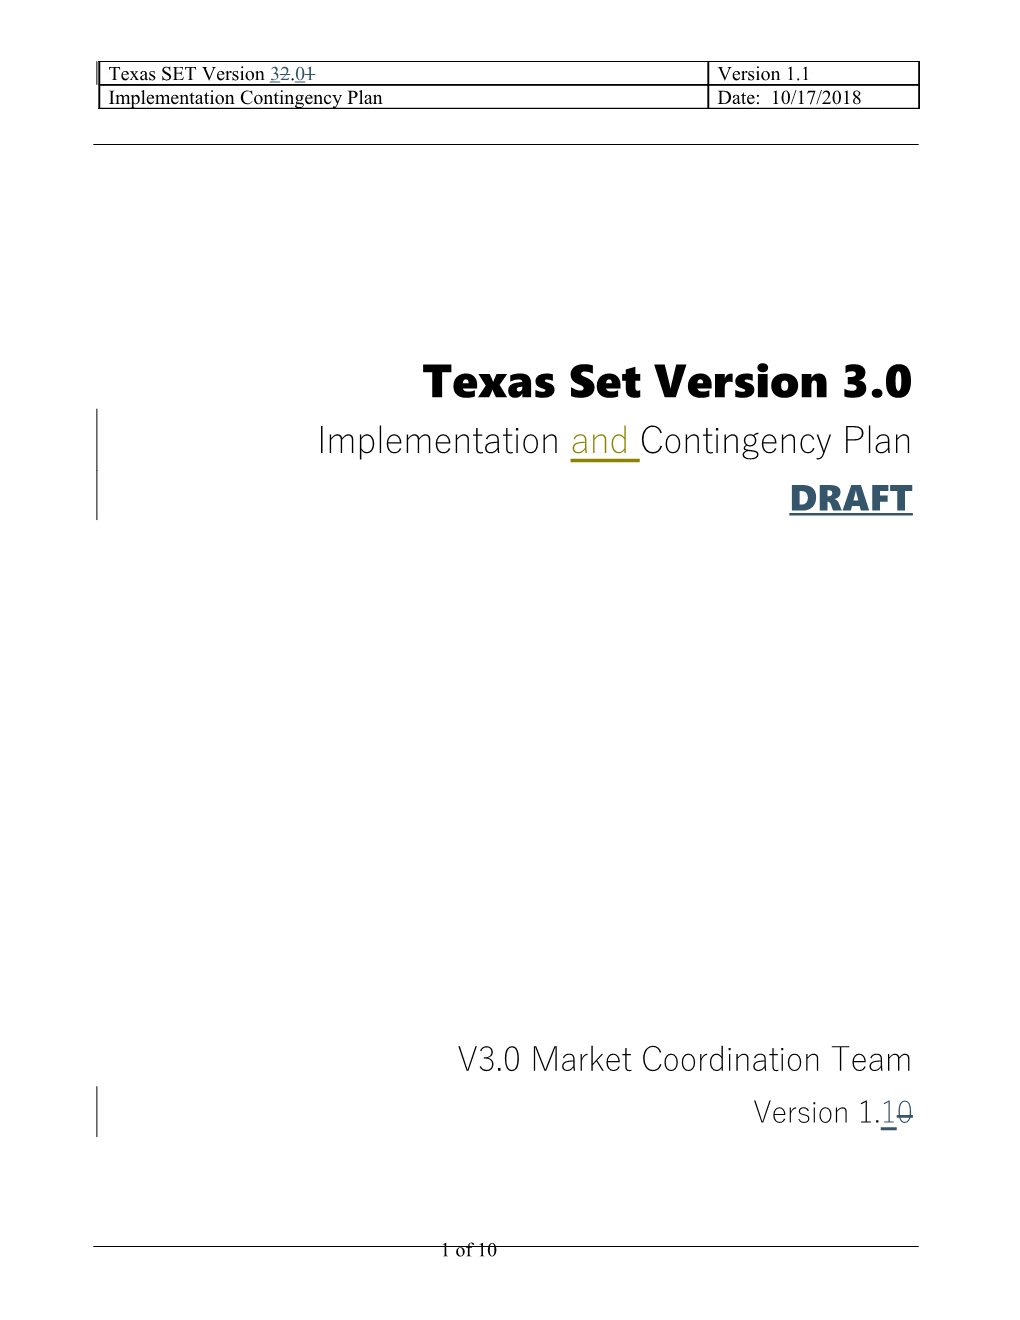 Texas Set Version 3.0